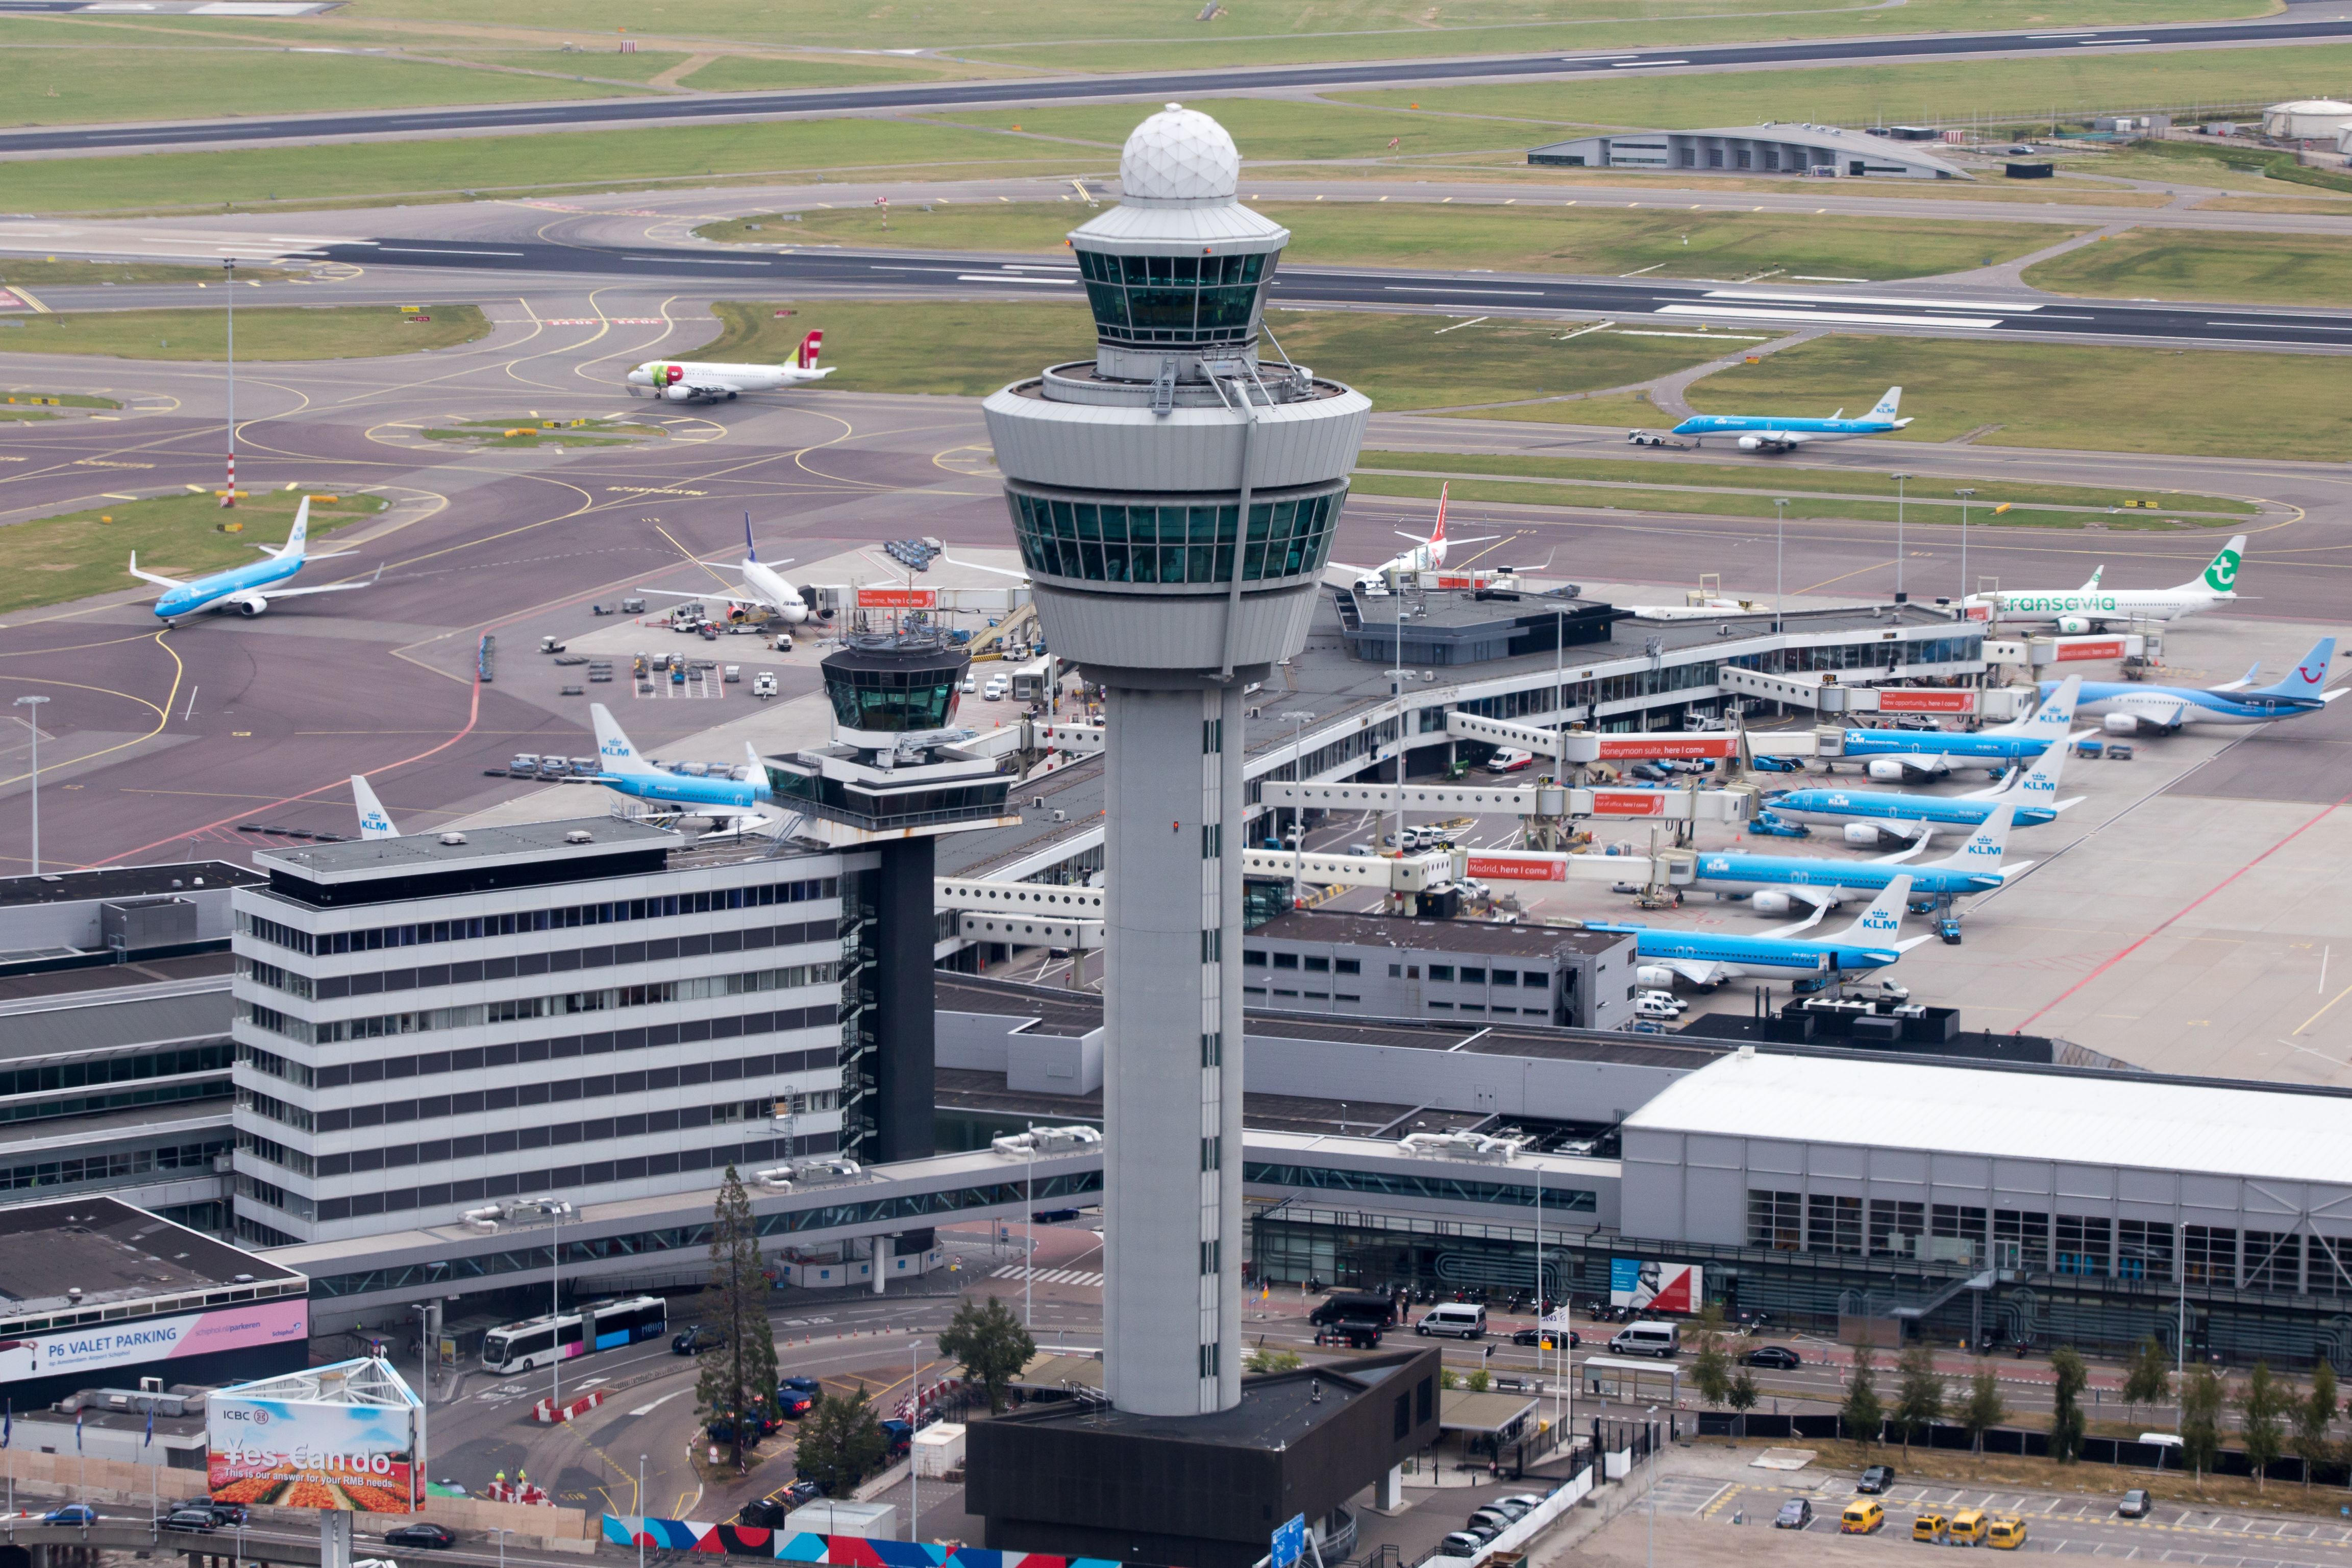 Schiphol ATC tower